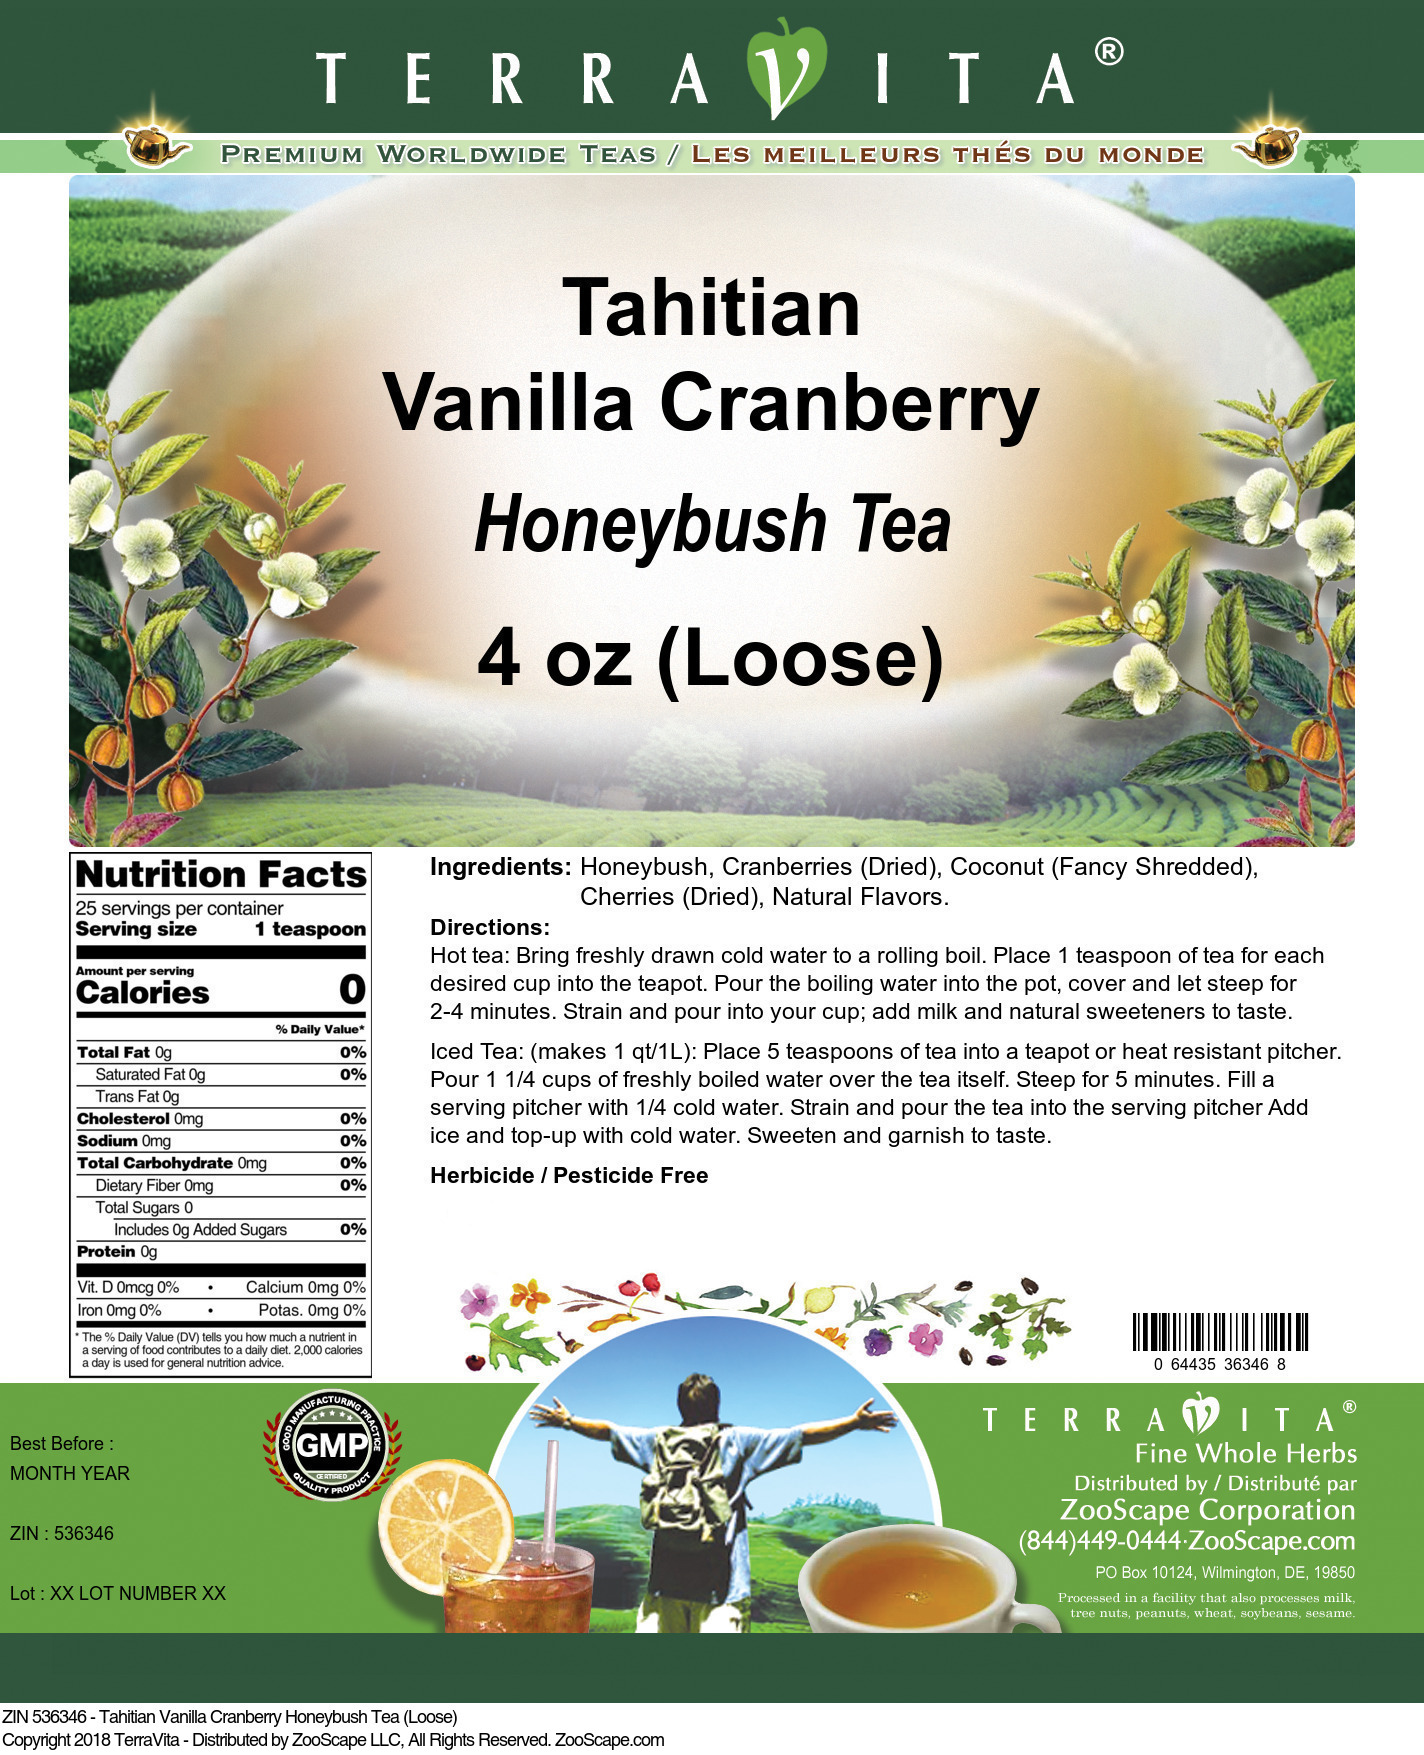 Tahitian Vanilla Cranberry Honeybush Tea (Loose) - Label